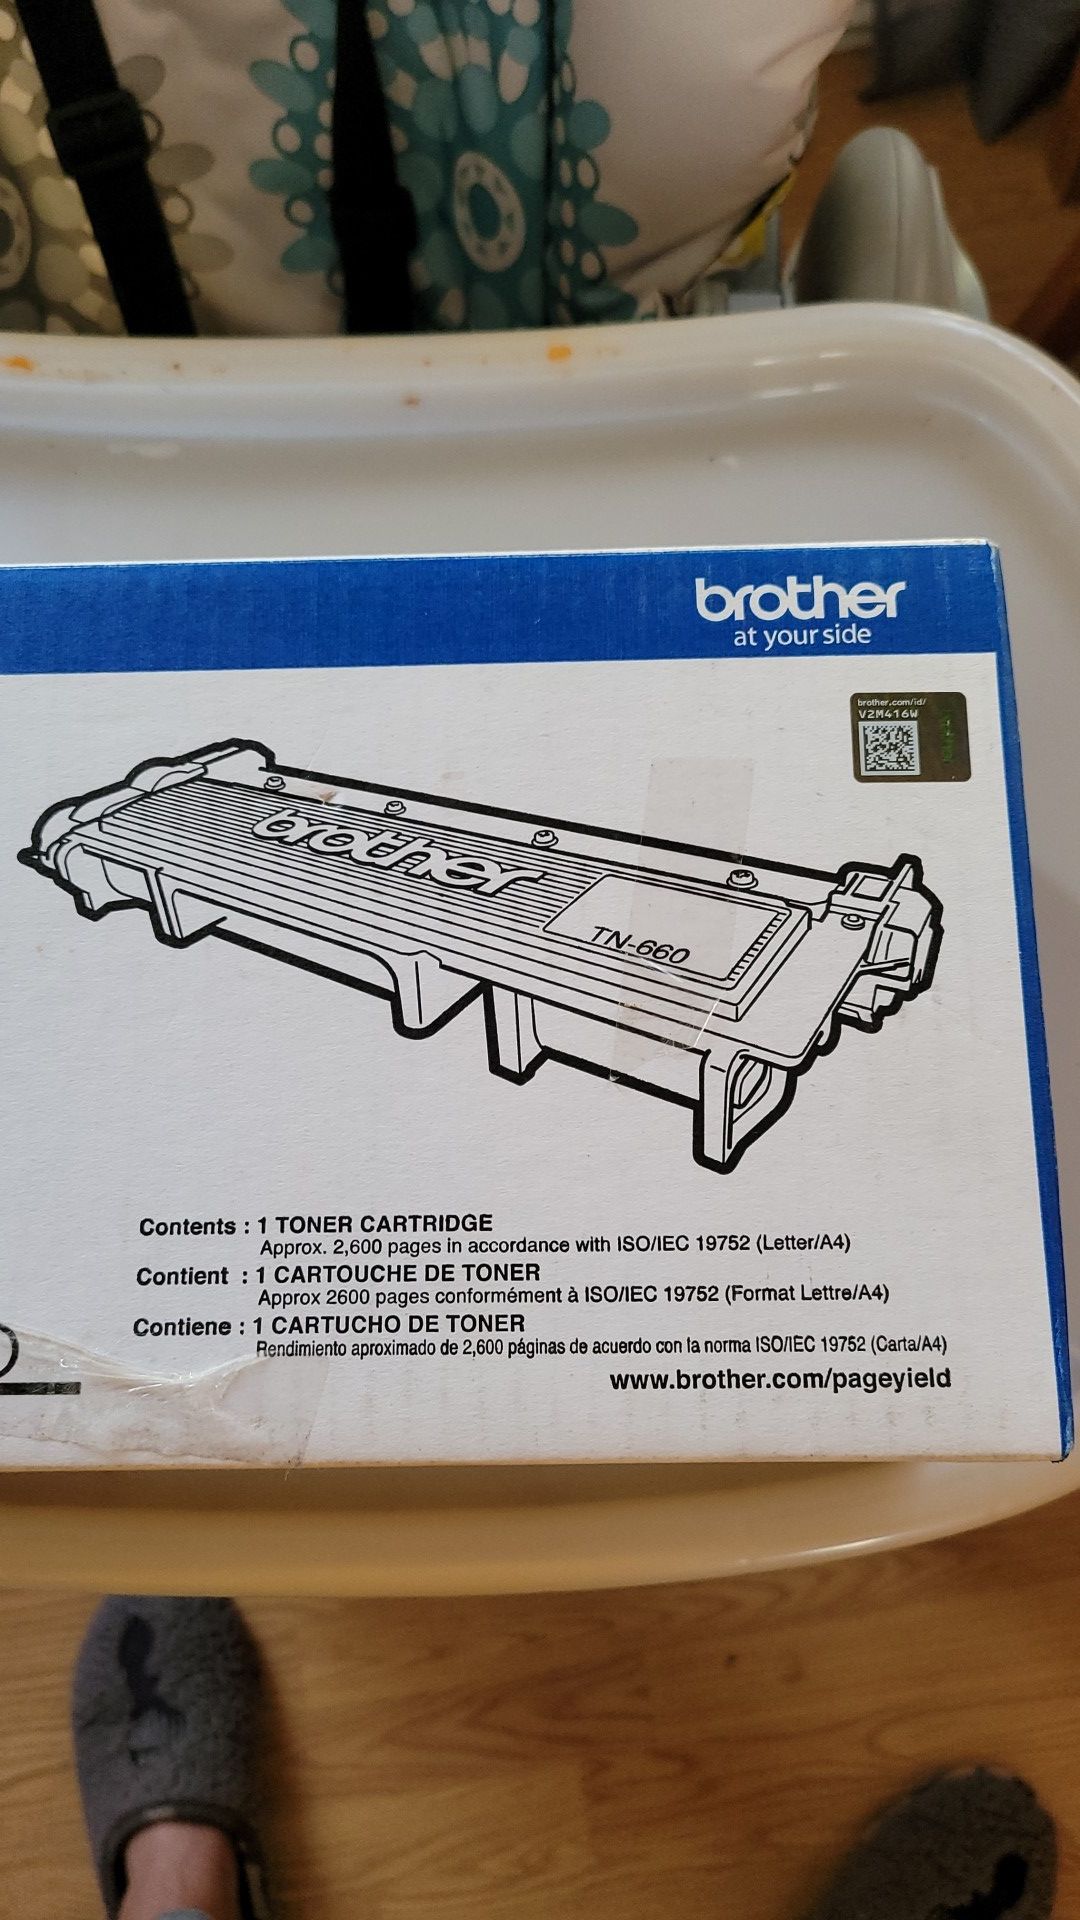 Toner for Brother printer